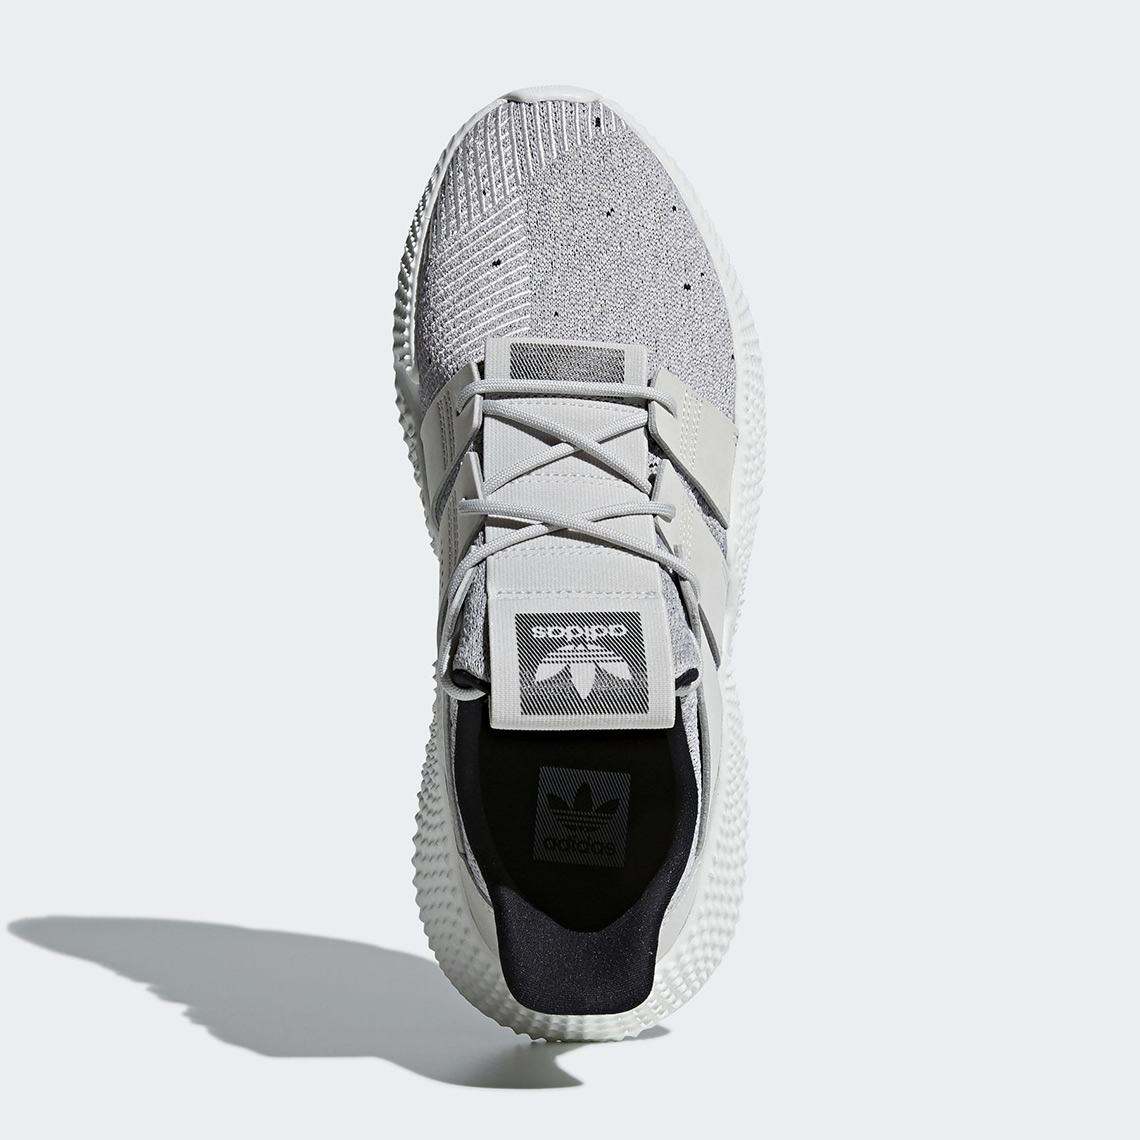 Adidas Prophere Grey Black White B37182 2